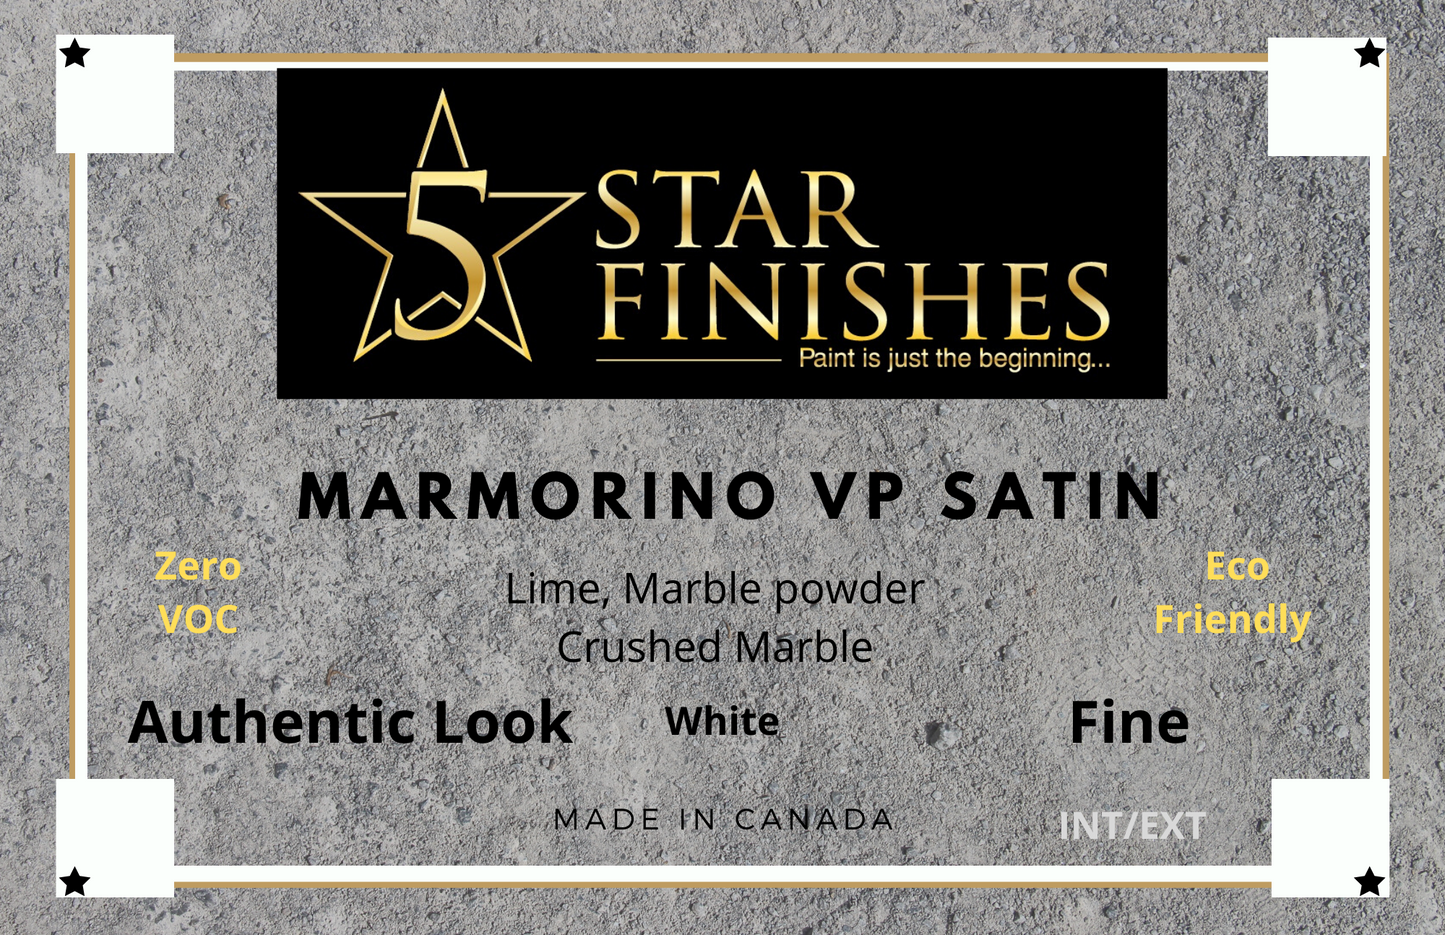 VP Satin Marmorino - 5 Star Finishes Ltd